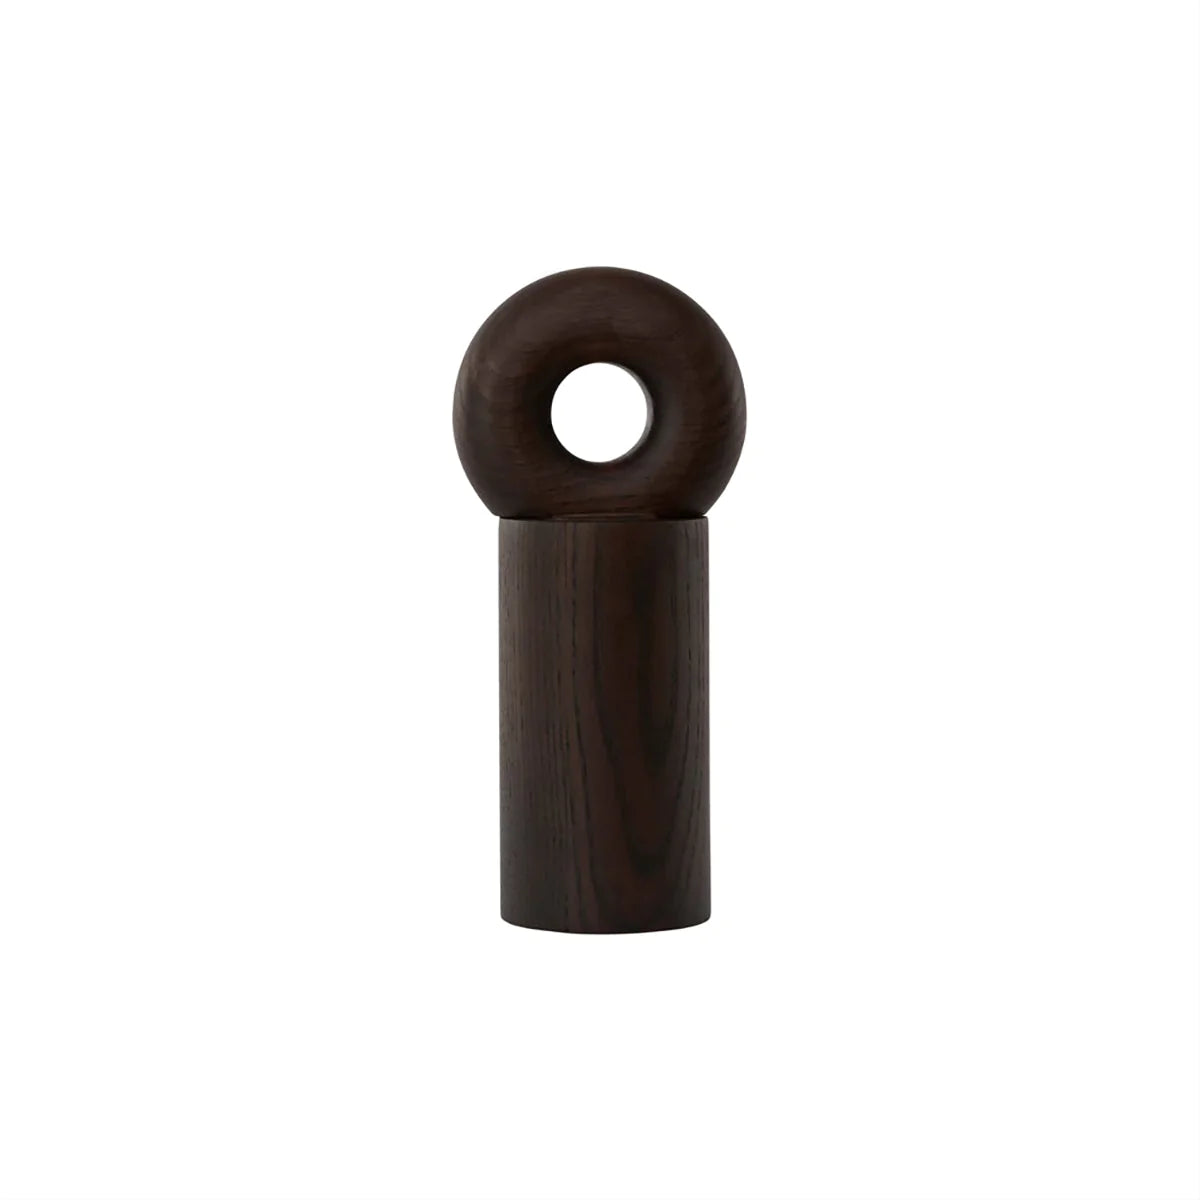 OYOY Είδη Κούζινας Μύλος Αλατιού/Πιπεριού Hoop Mill Grinder Ξύλο Καφέ/Μαύρο Ø7,5xH16,5 cm OYOY